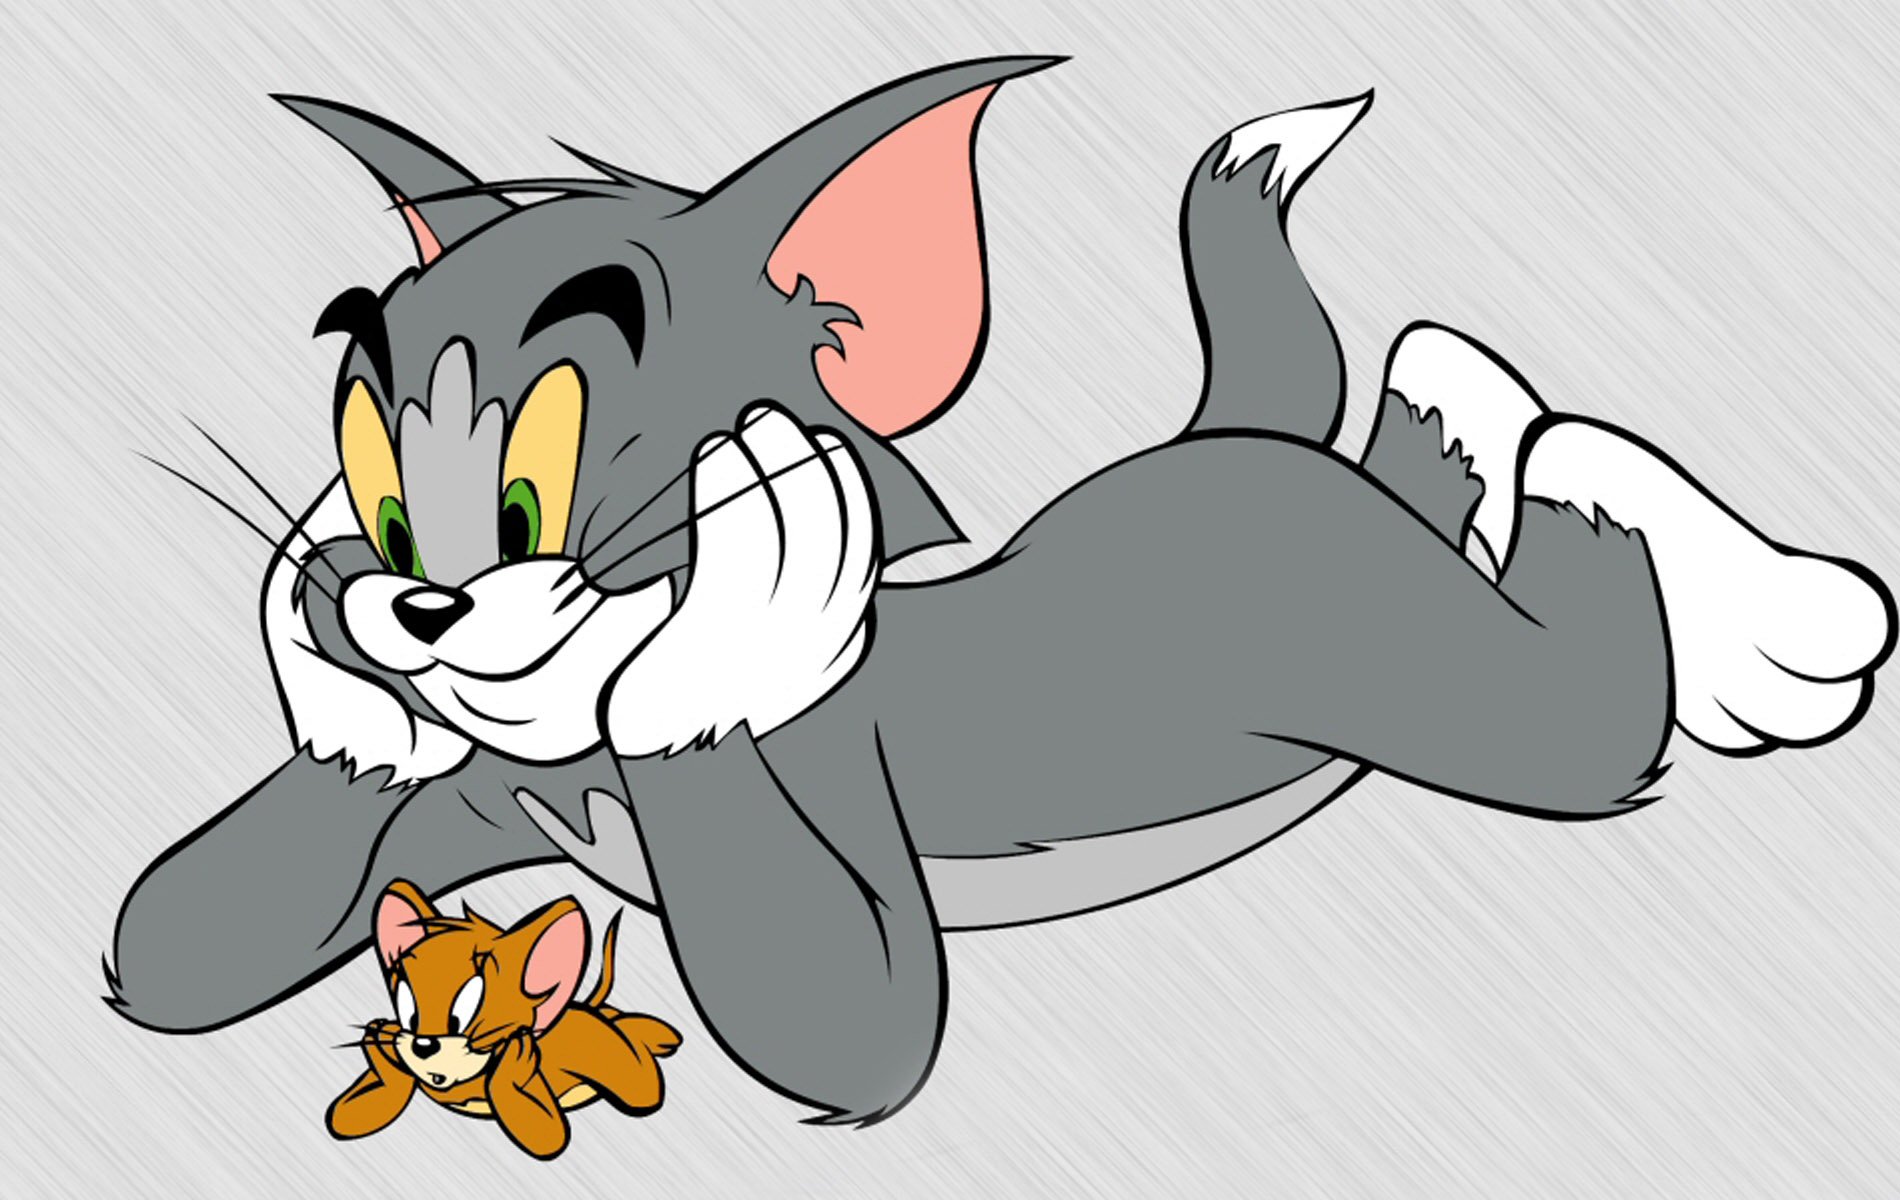 Tom i Jerry kreskówki porno